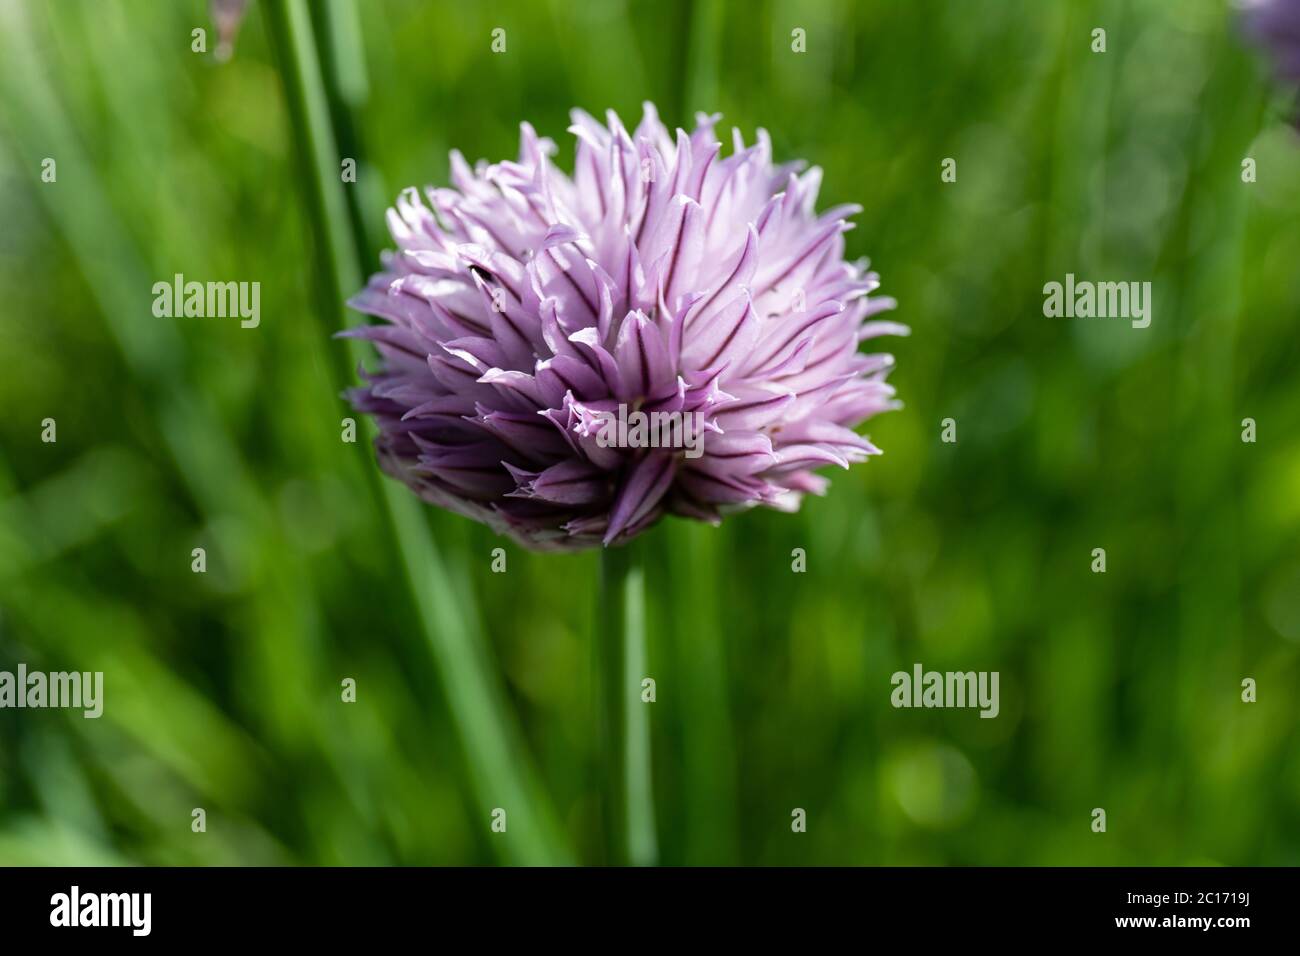 Star-shaped pale purple flower of Chives, scientific name Allium schoenoprasum Stock Photo